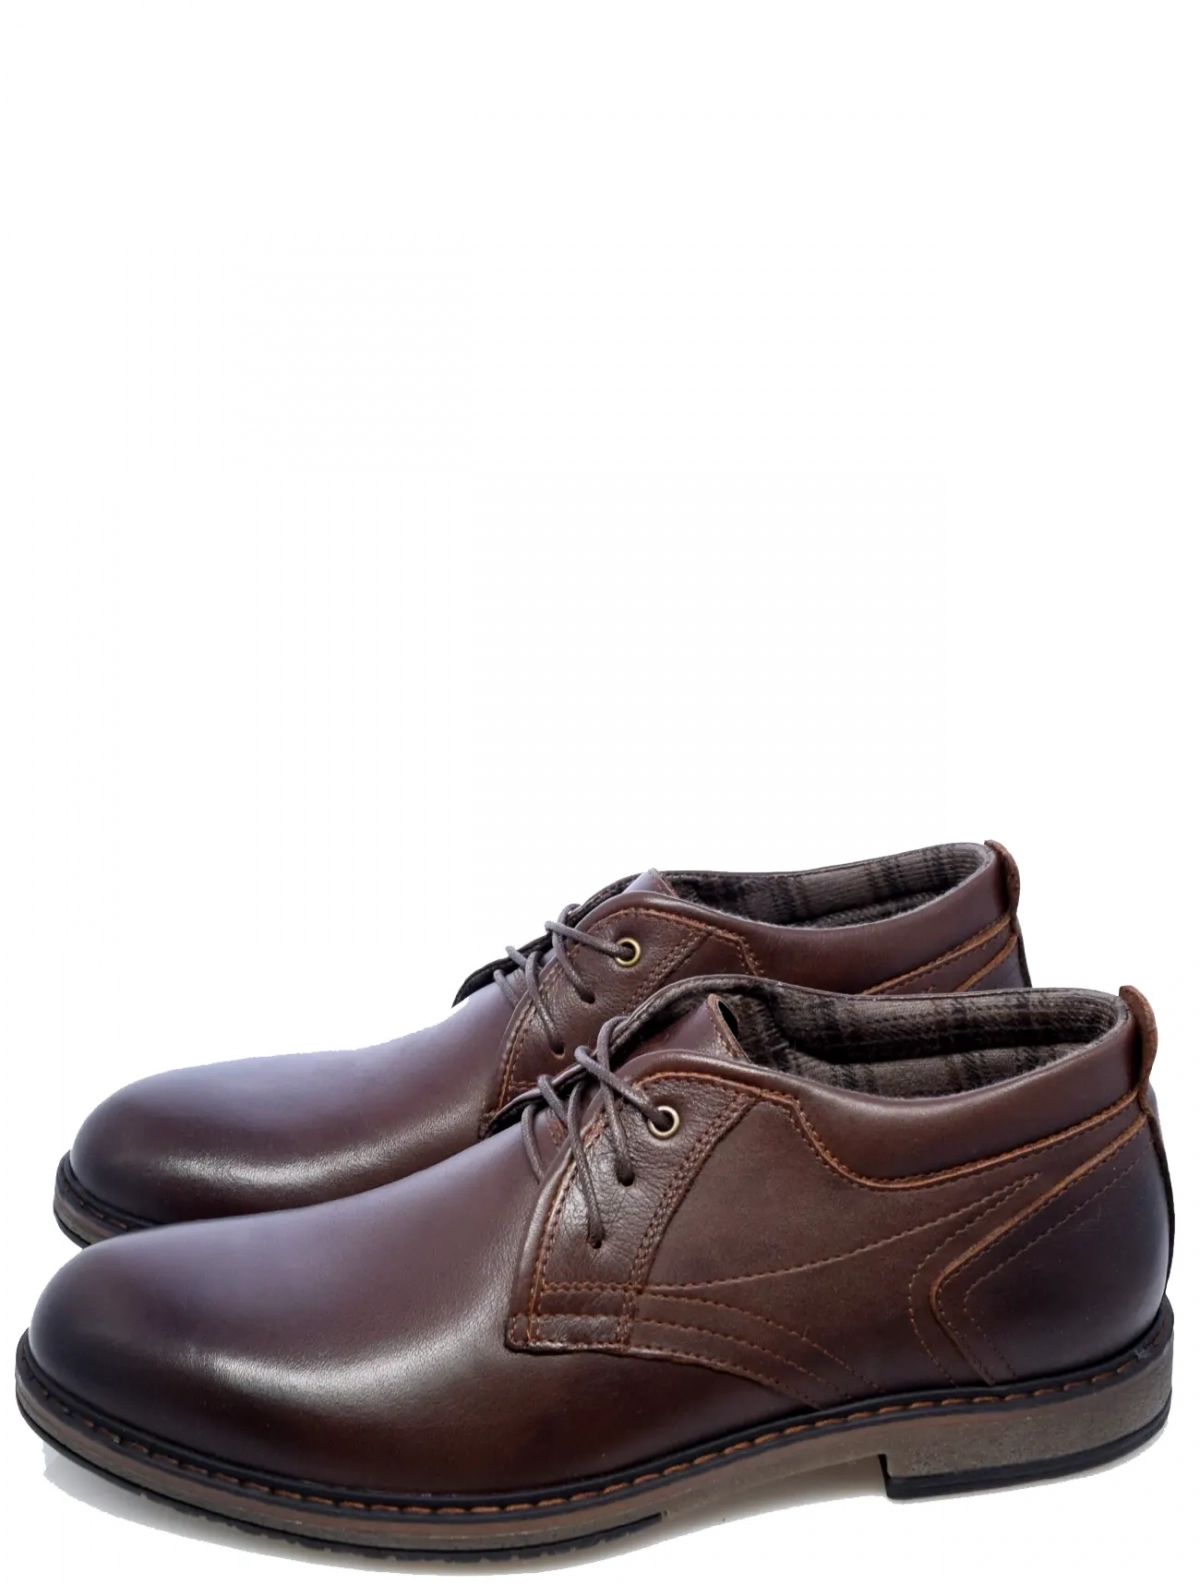 Bossner 1-630-301-4 мужские туфли